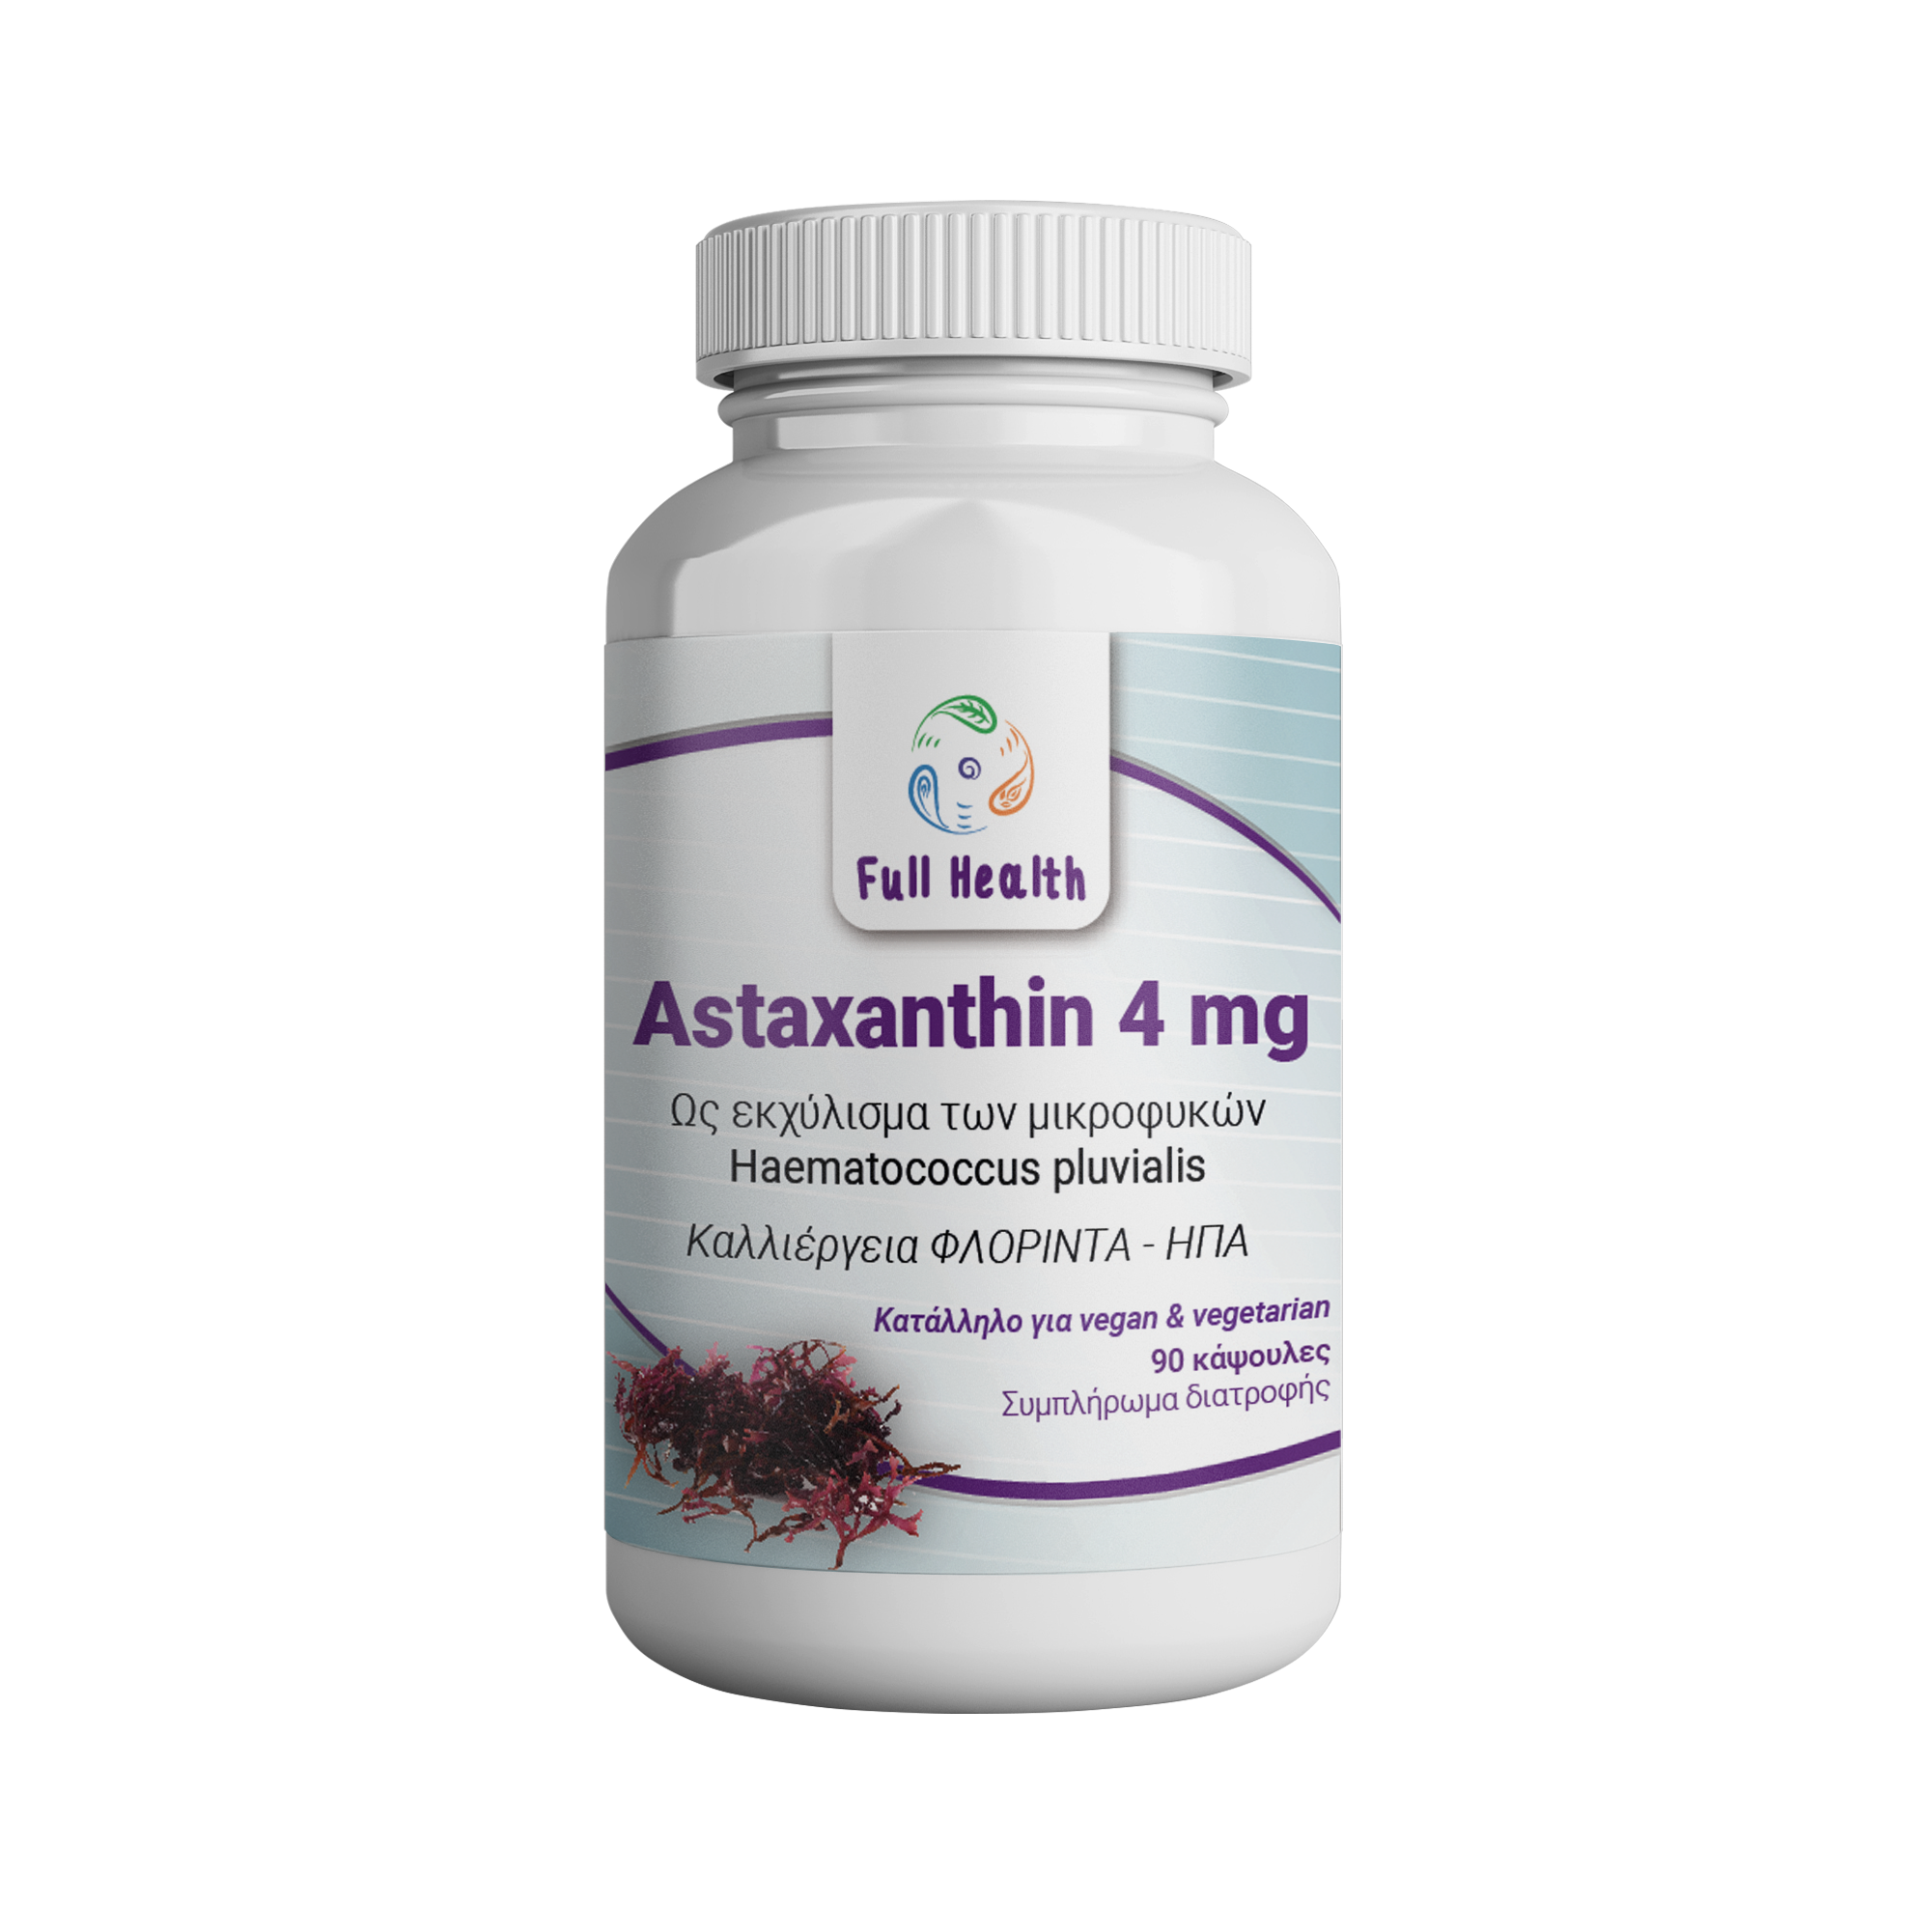 Full Health Astaxanthin 4 mg 90 softgels (Συμπλήρωμα διατροφής με ασταξανθίνη, ειδικά πατενταρισμένης μορφής)